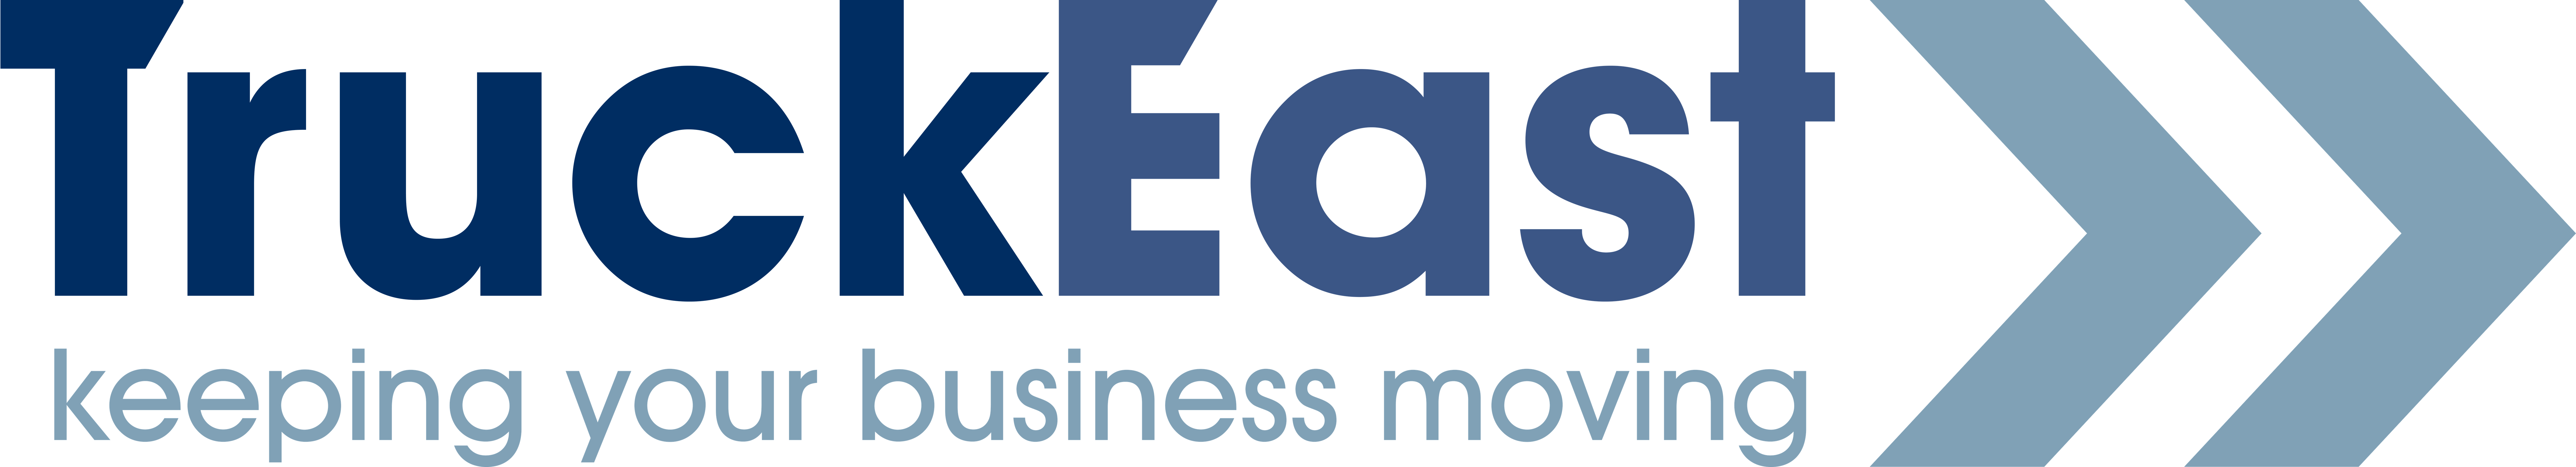 Truck East logo